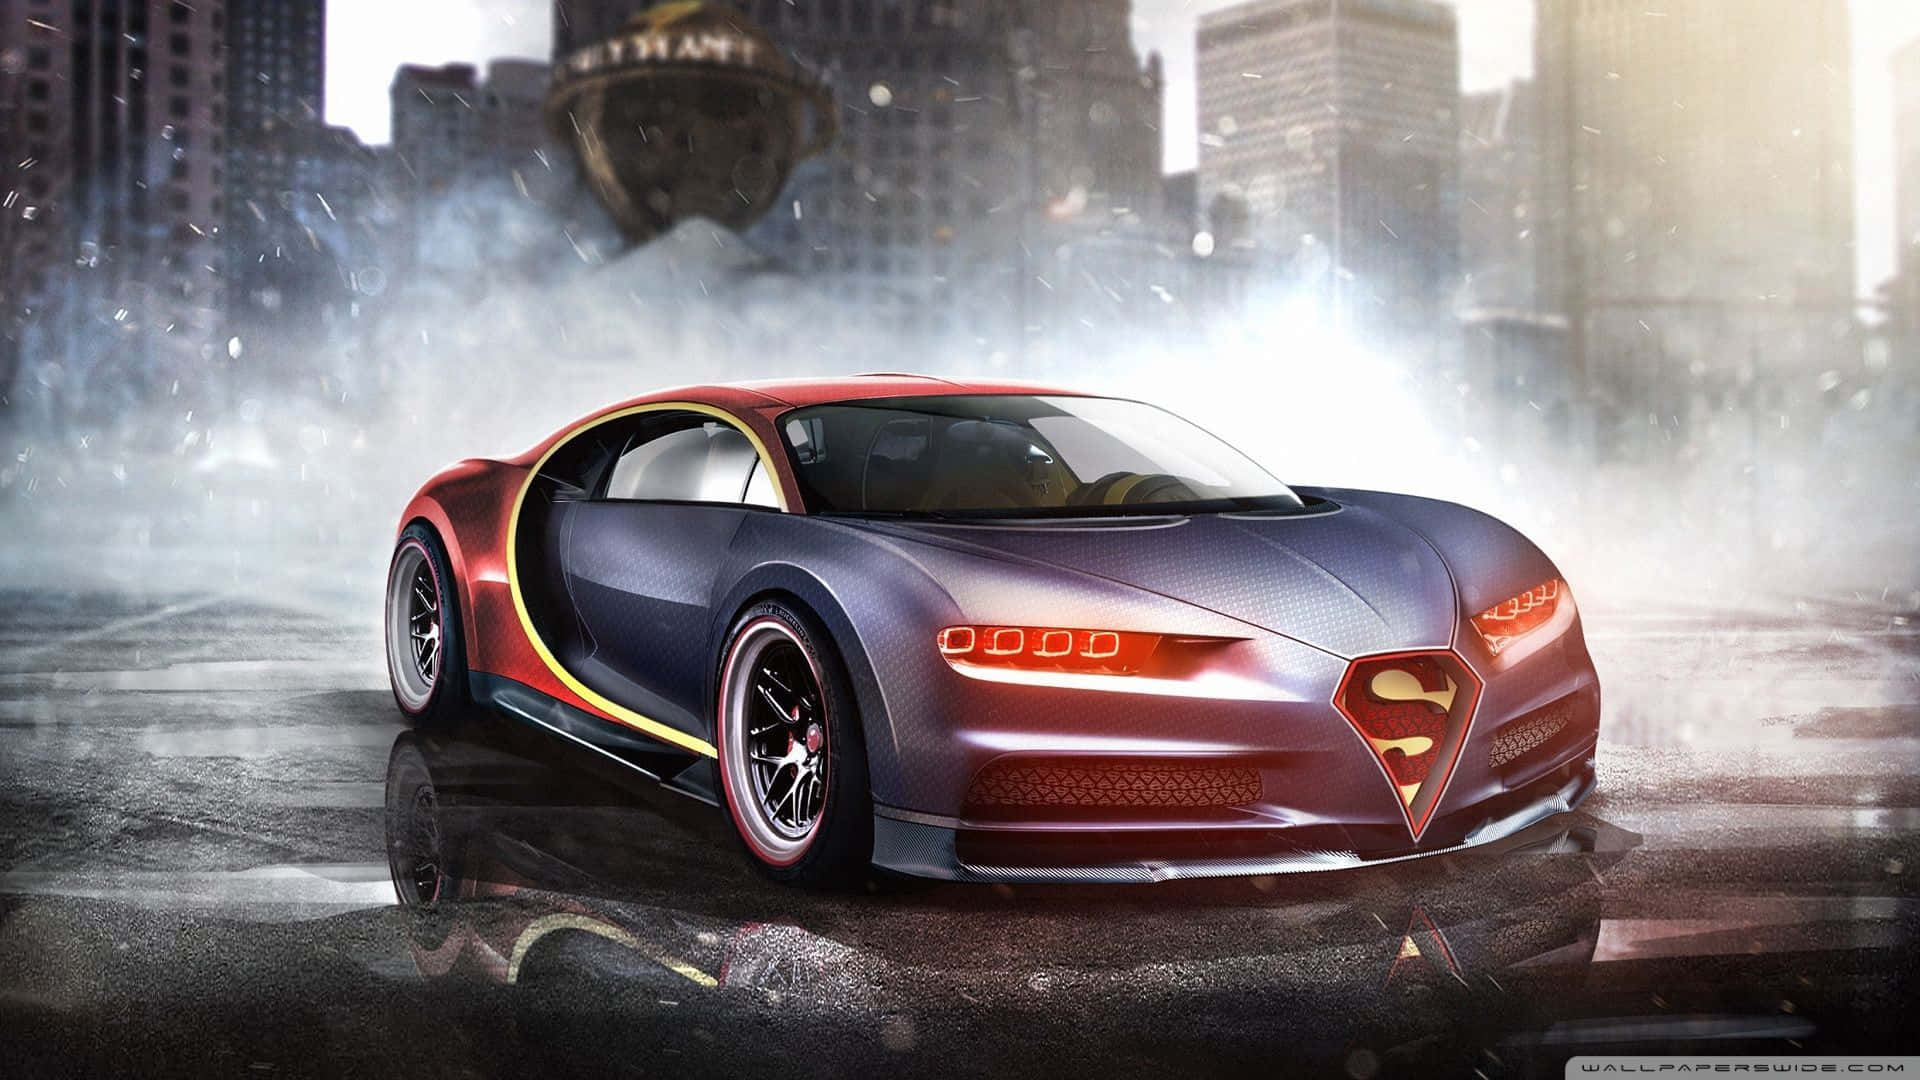 The Best Bugatti - Experience a High-Speed Luxury